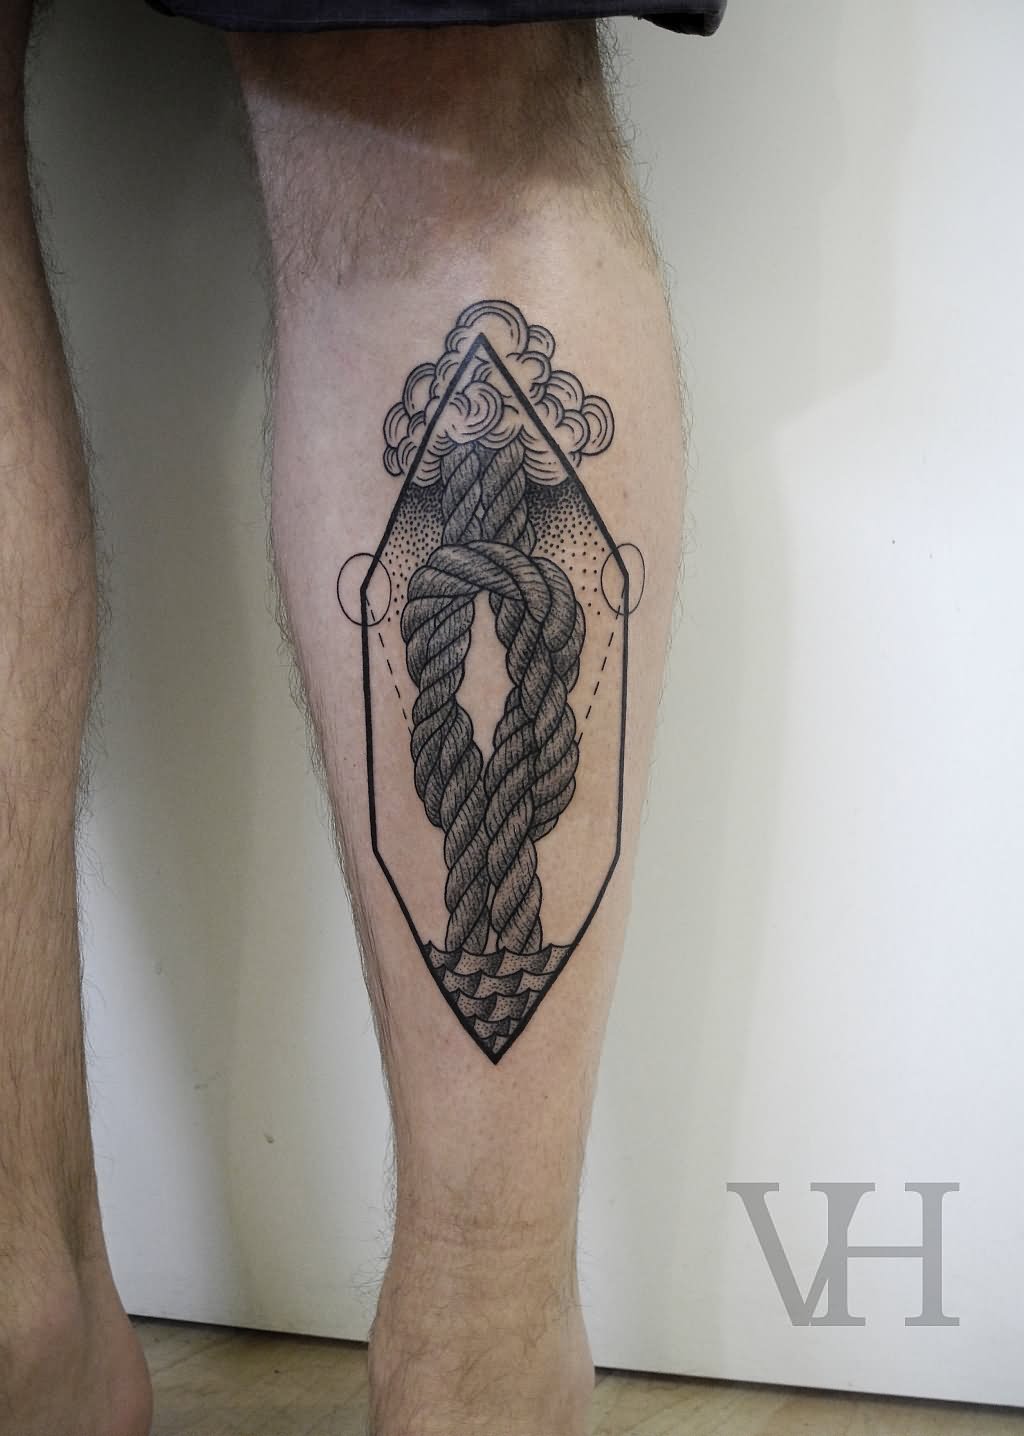 Black Ink Rope Knot Tattoo Design For Leg Calf